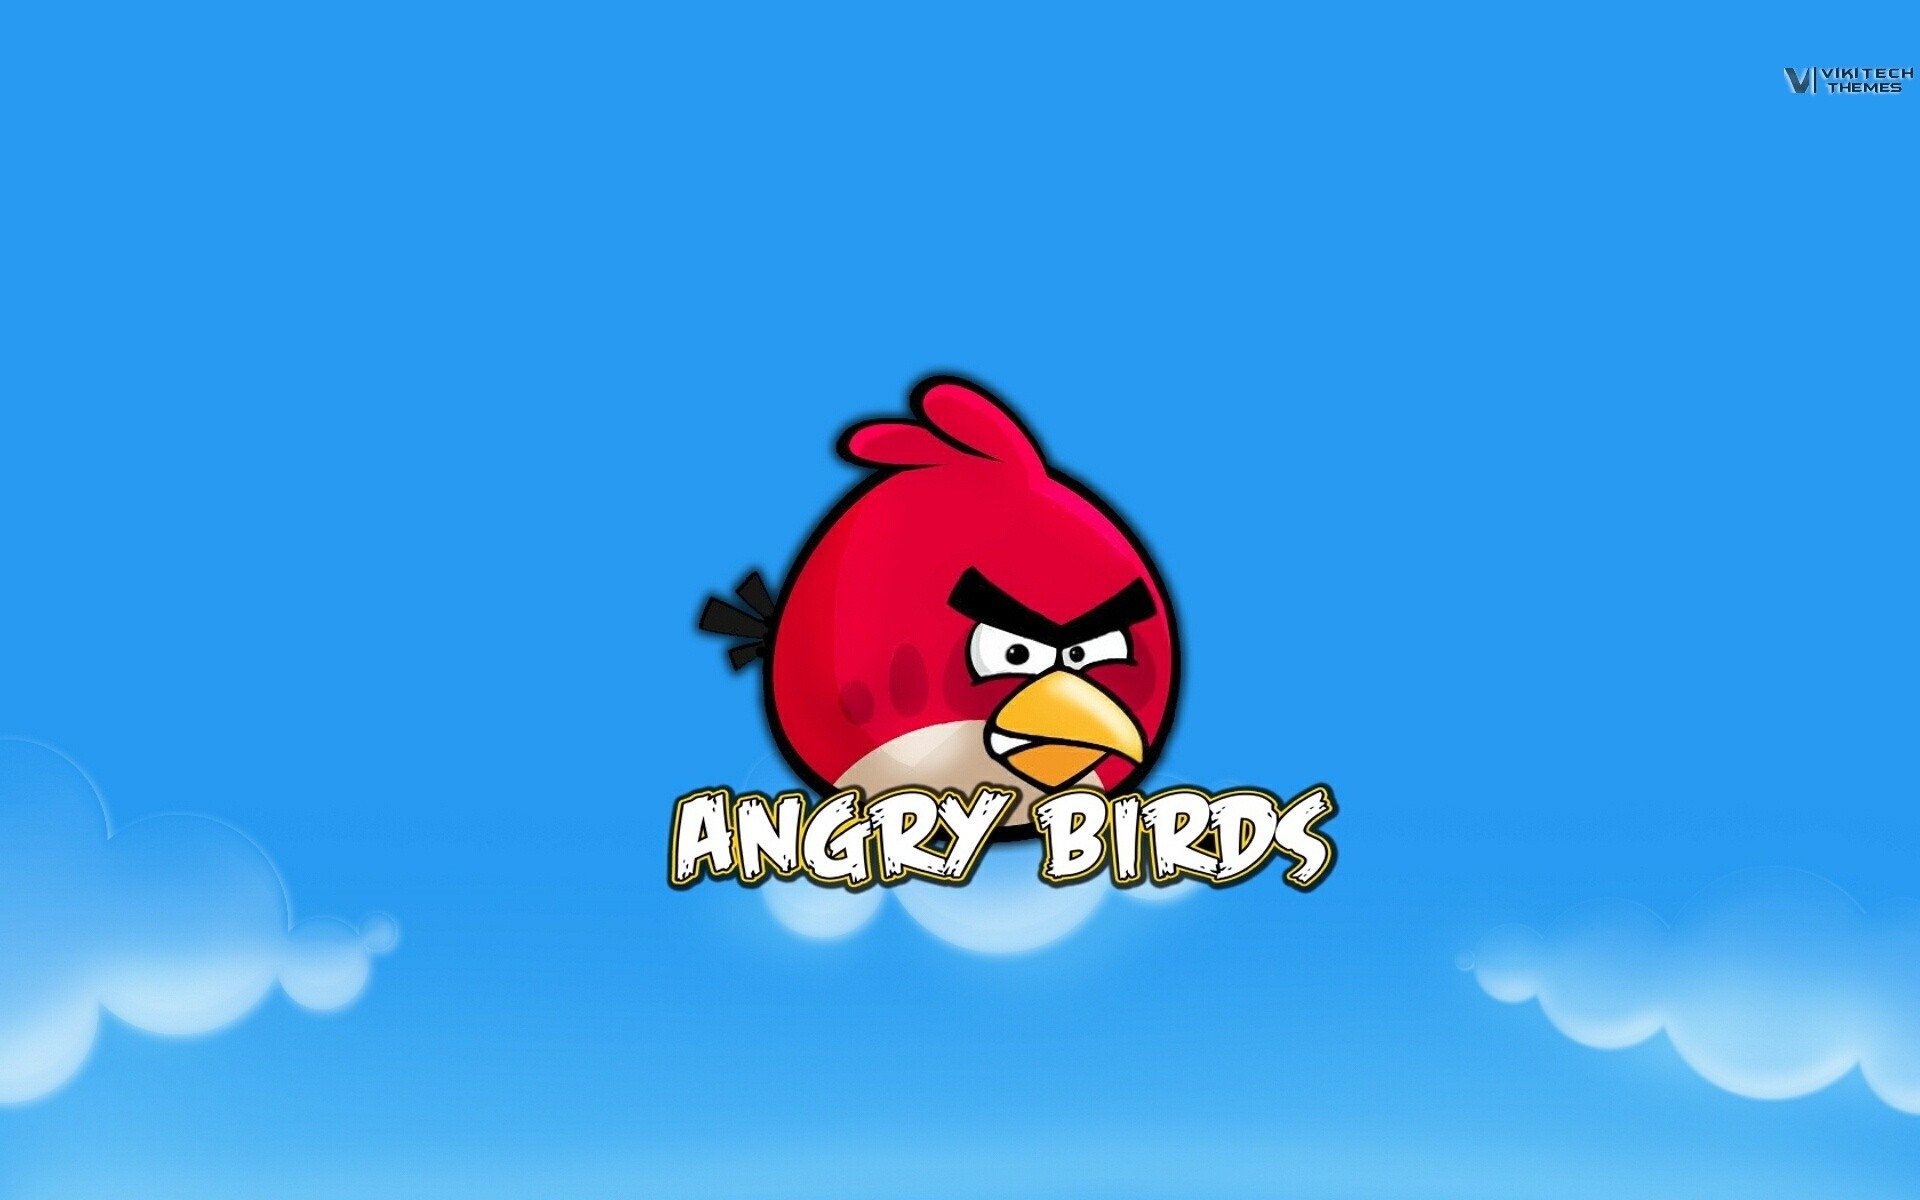 gambar angry bird wallpaper keren